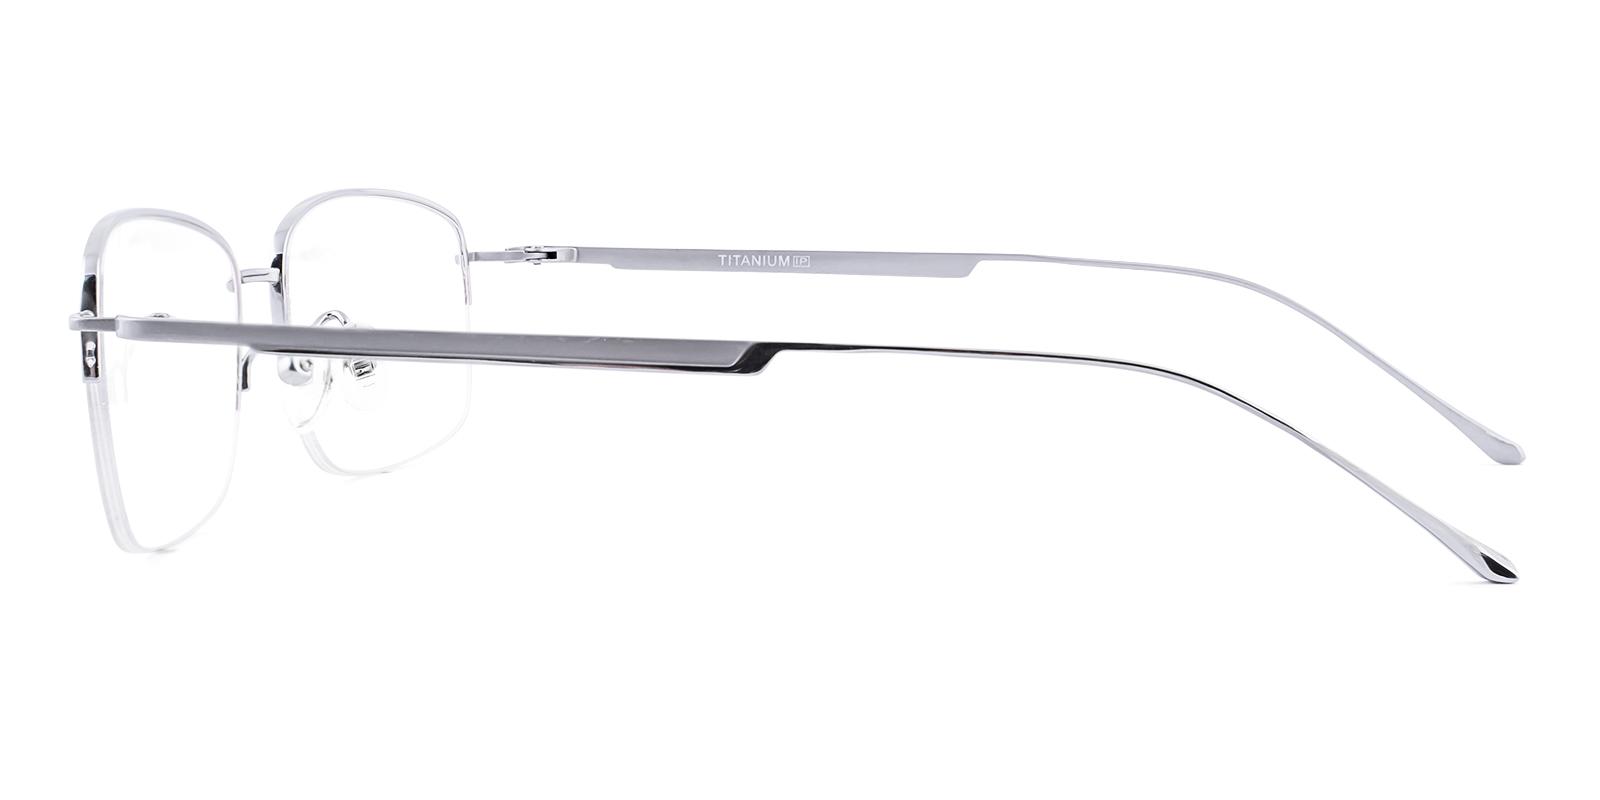 Tatkin Silver Titanium Eyeglasses , NosePads Frames from ABBE Glasses